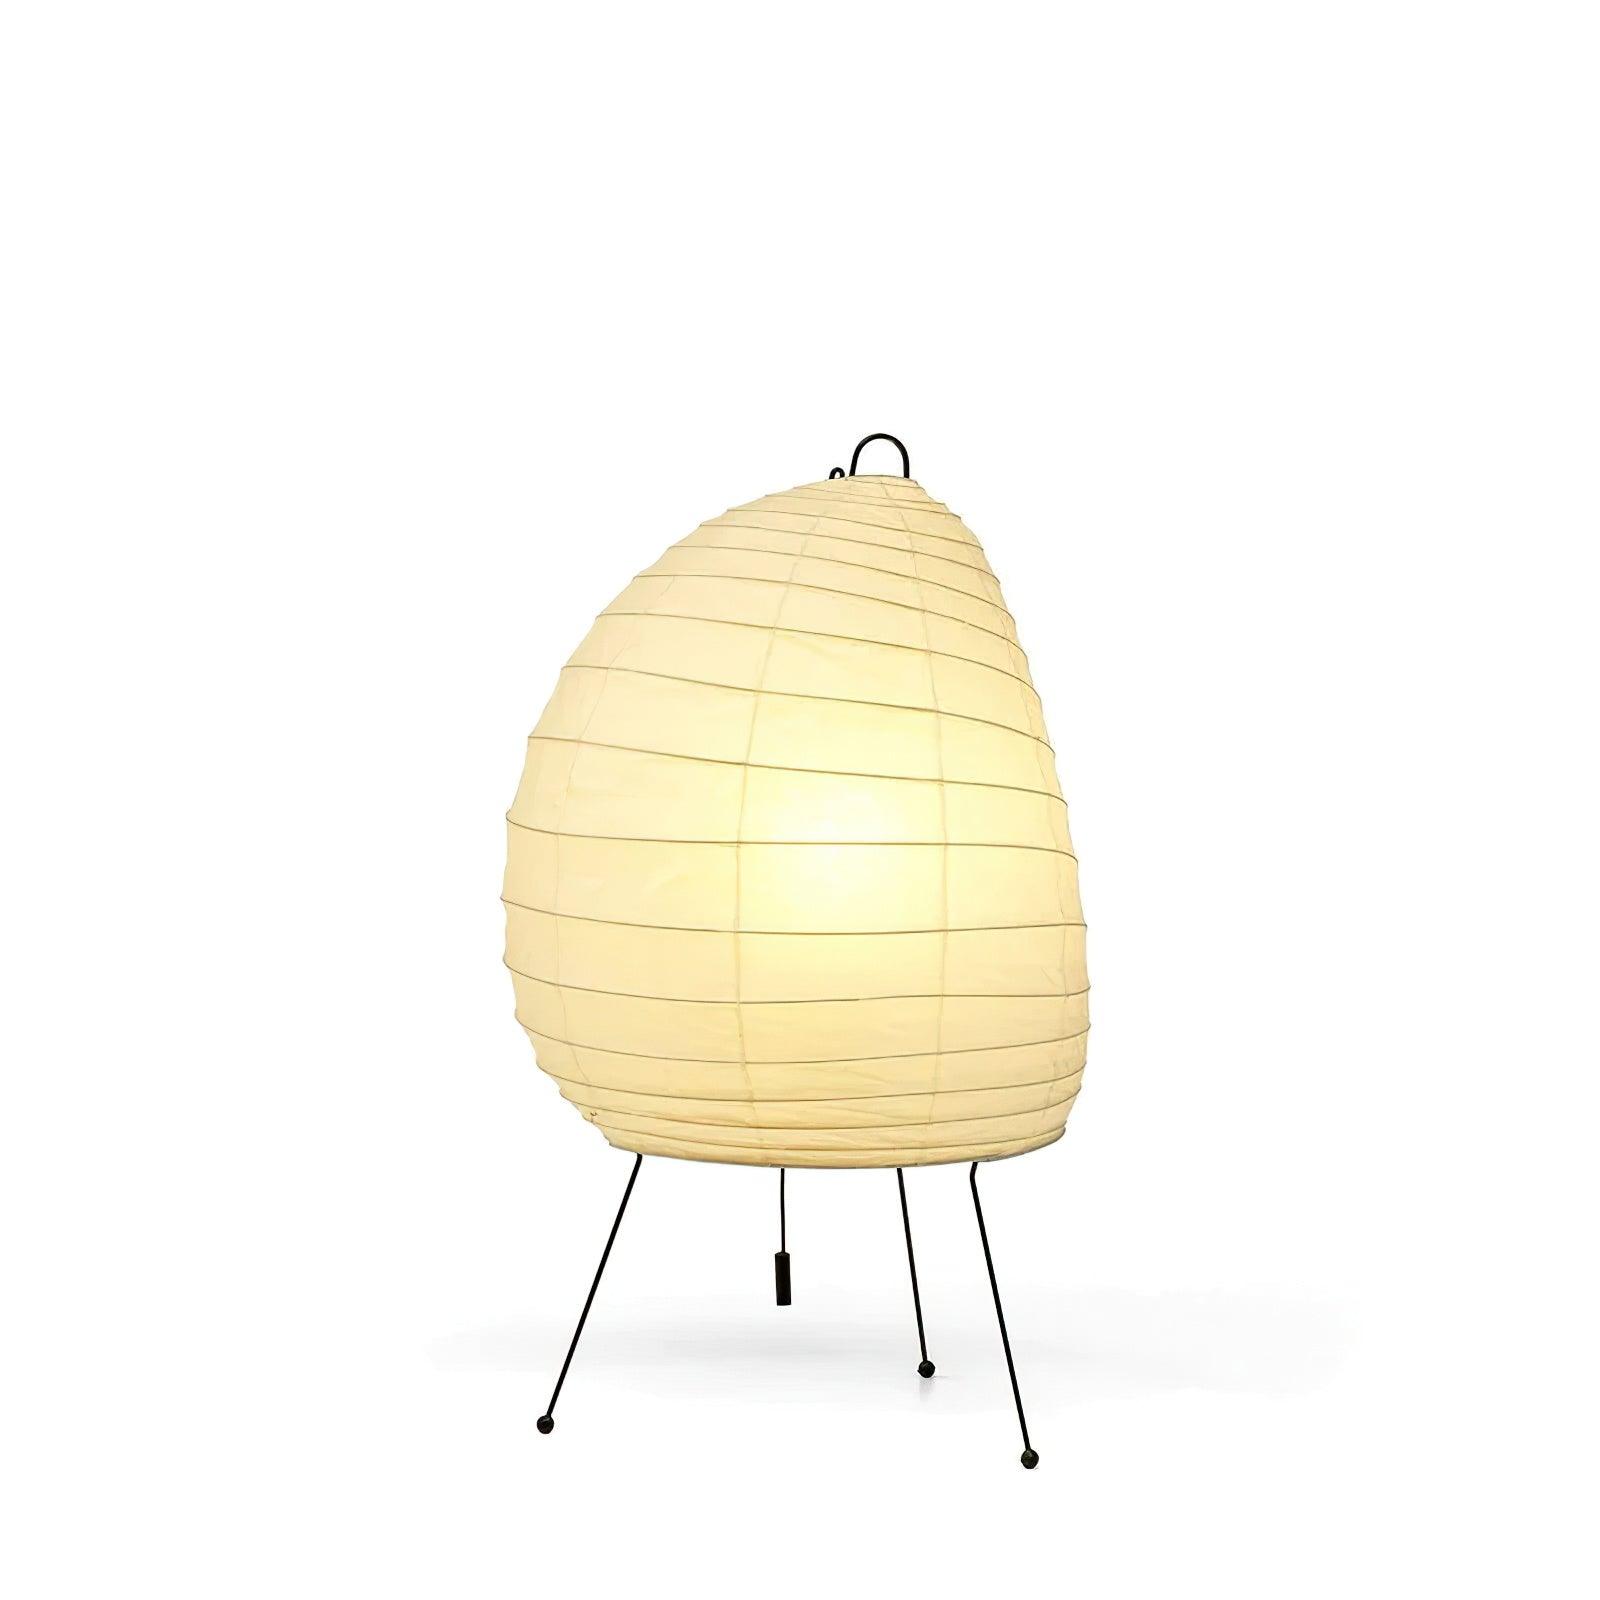 Washi Table Lamp